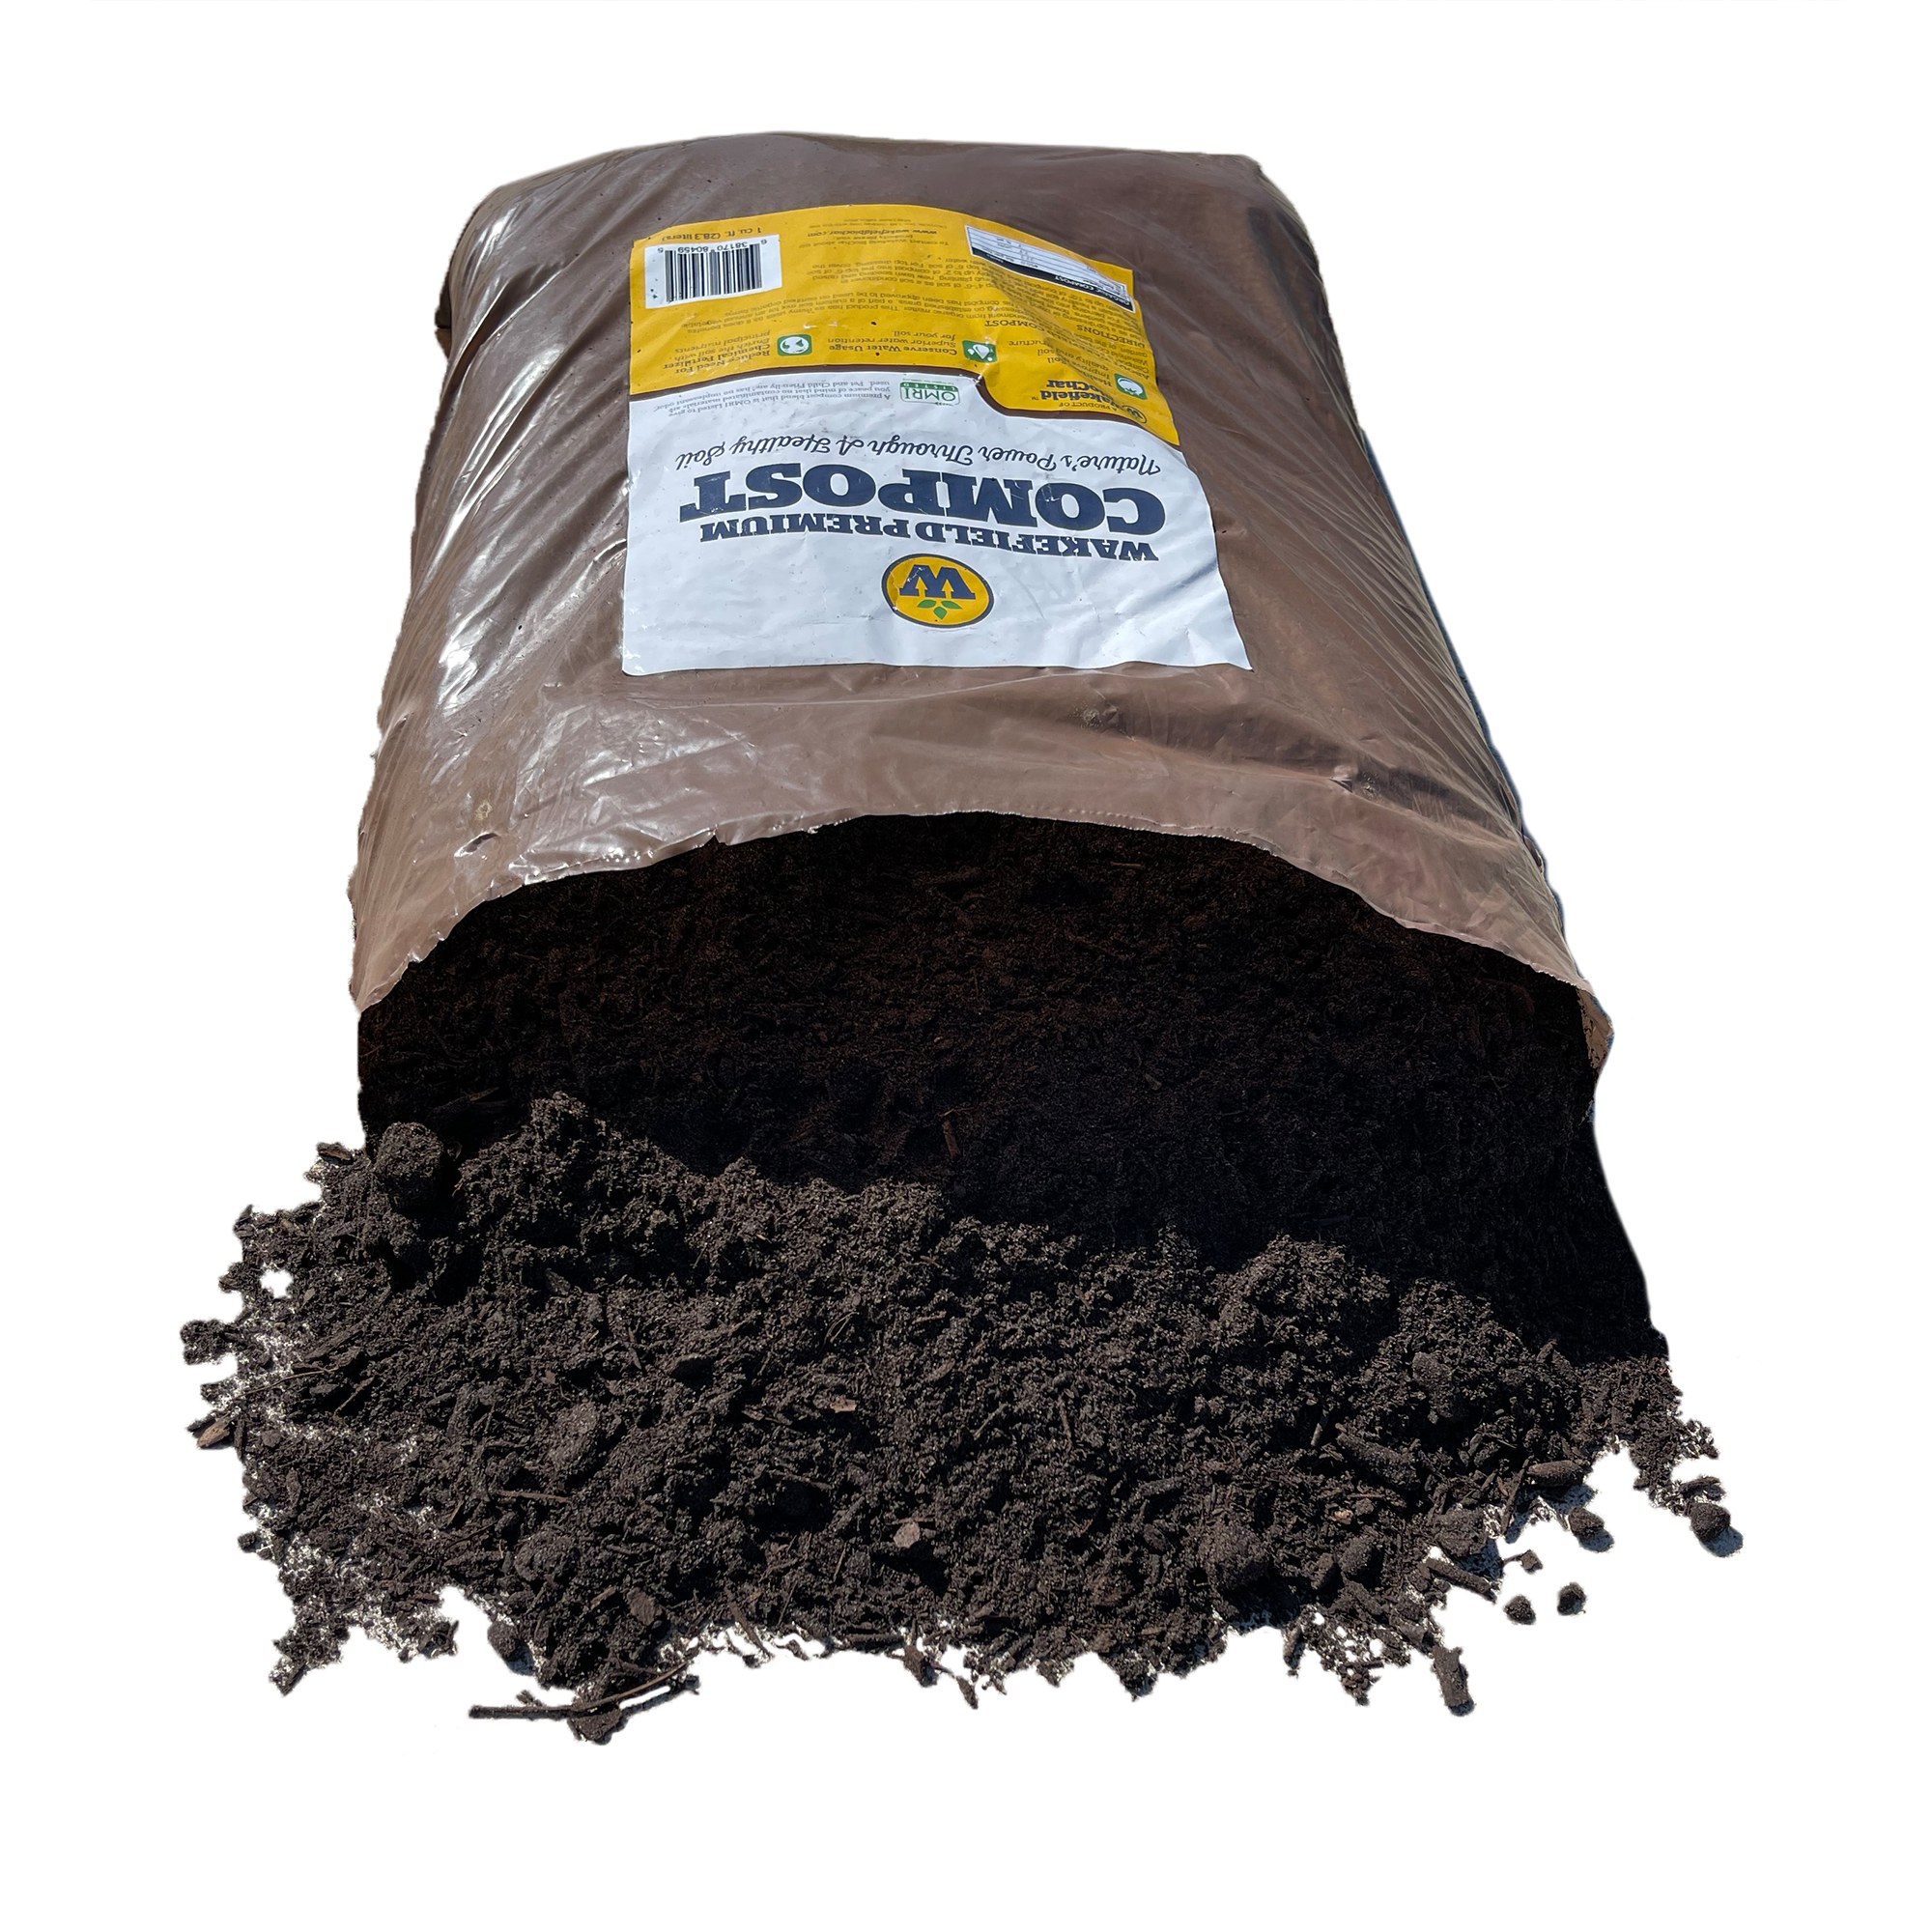 Wakefield BioChar Garden Premium Compost for Healthier Soil 1 Cubic Feet Bag - image 5 of 5